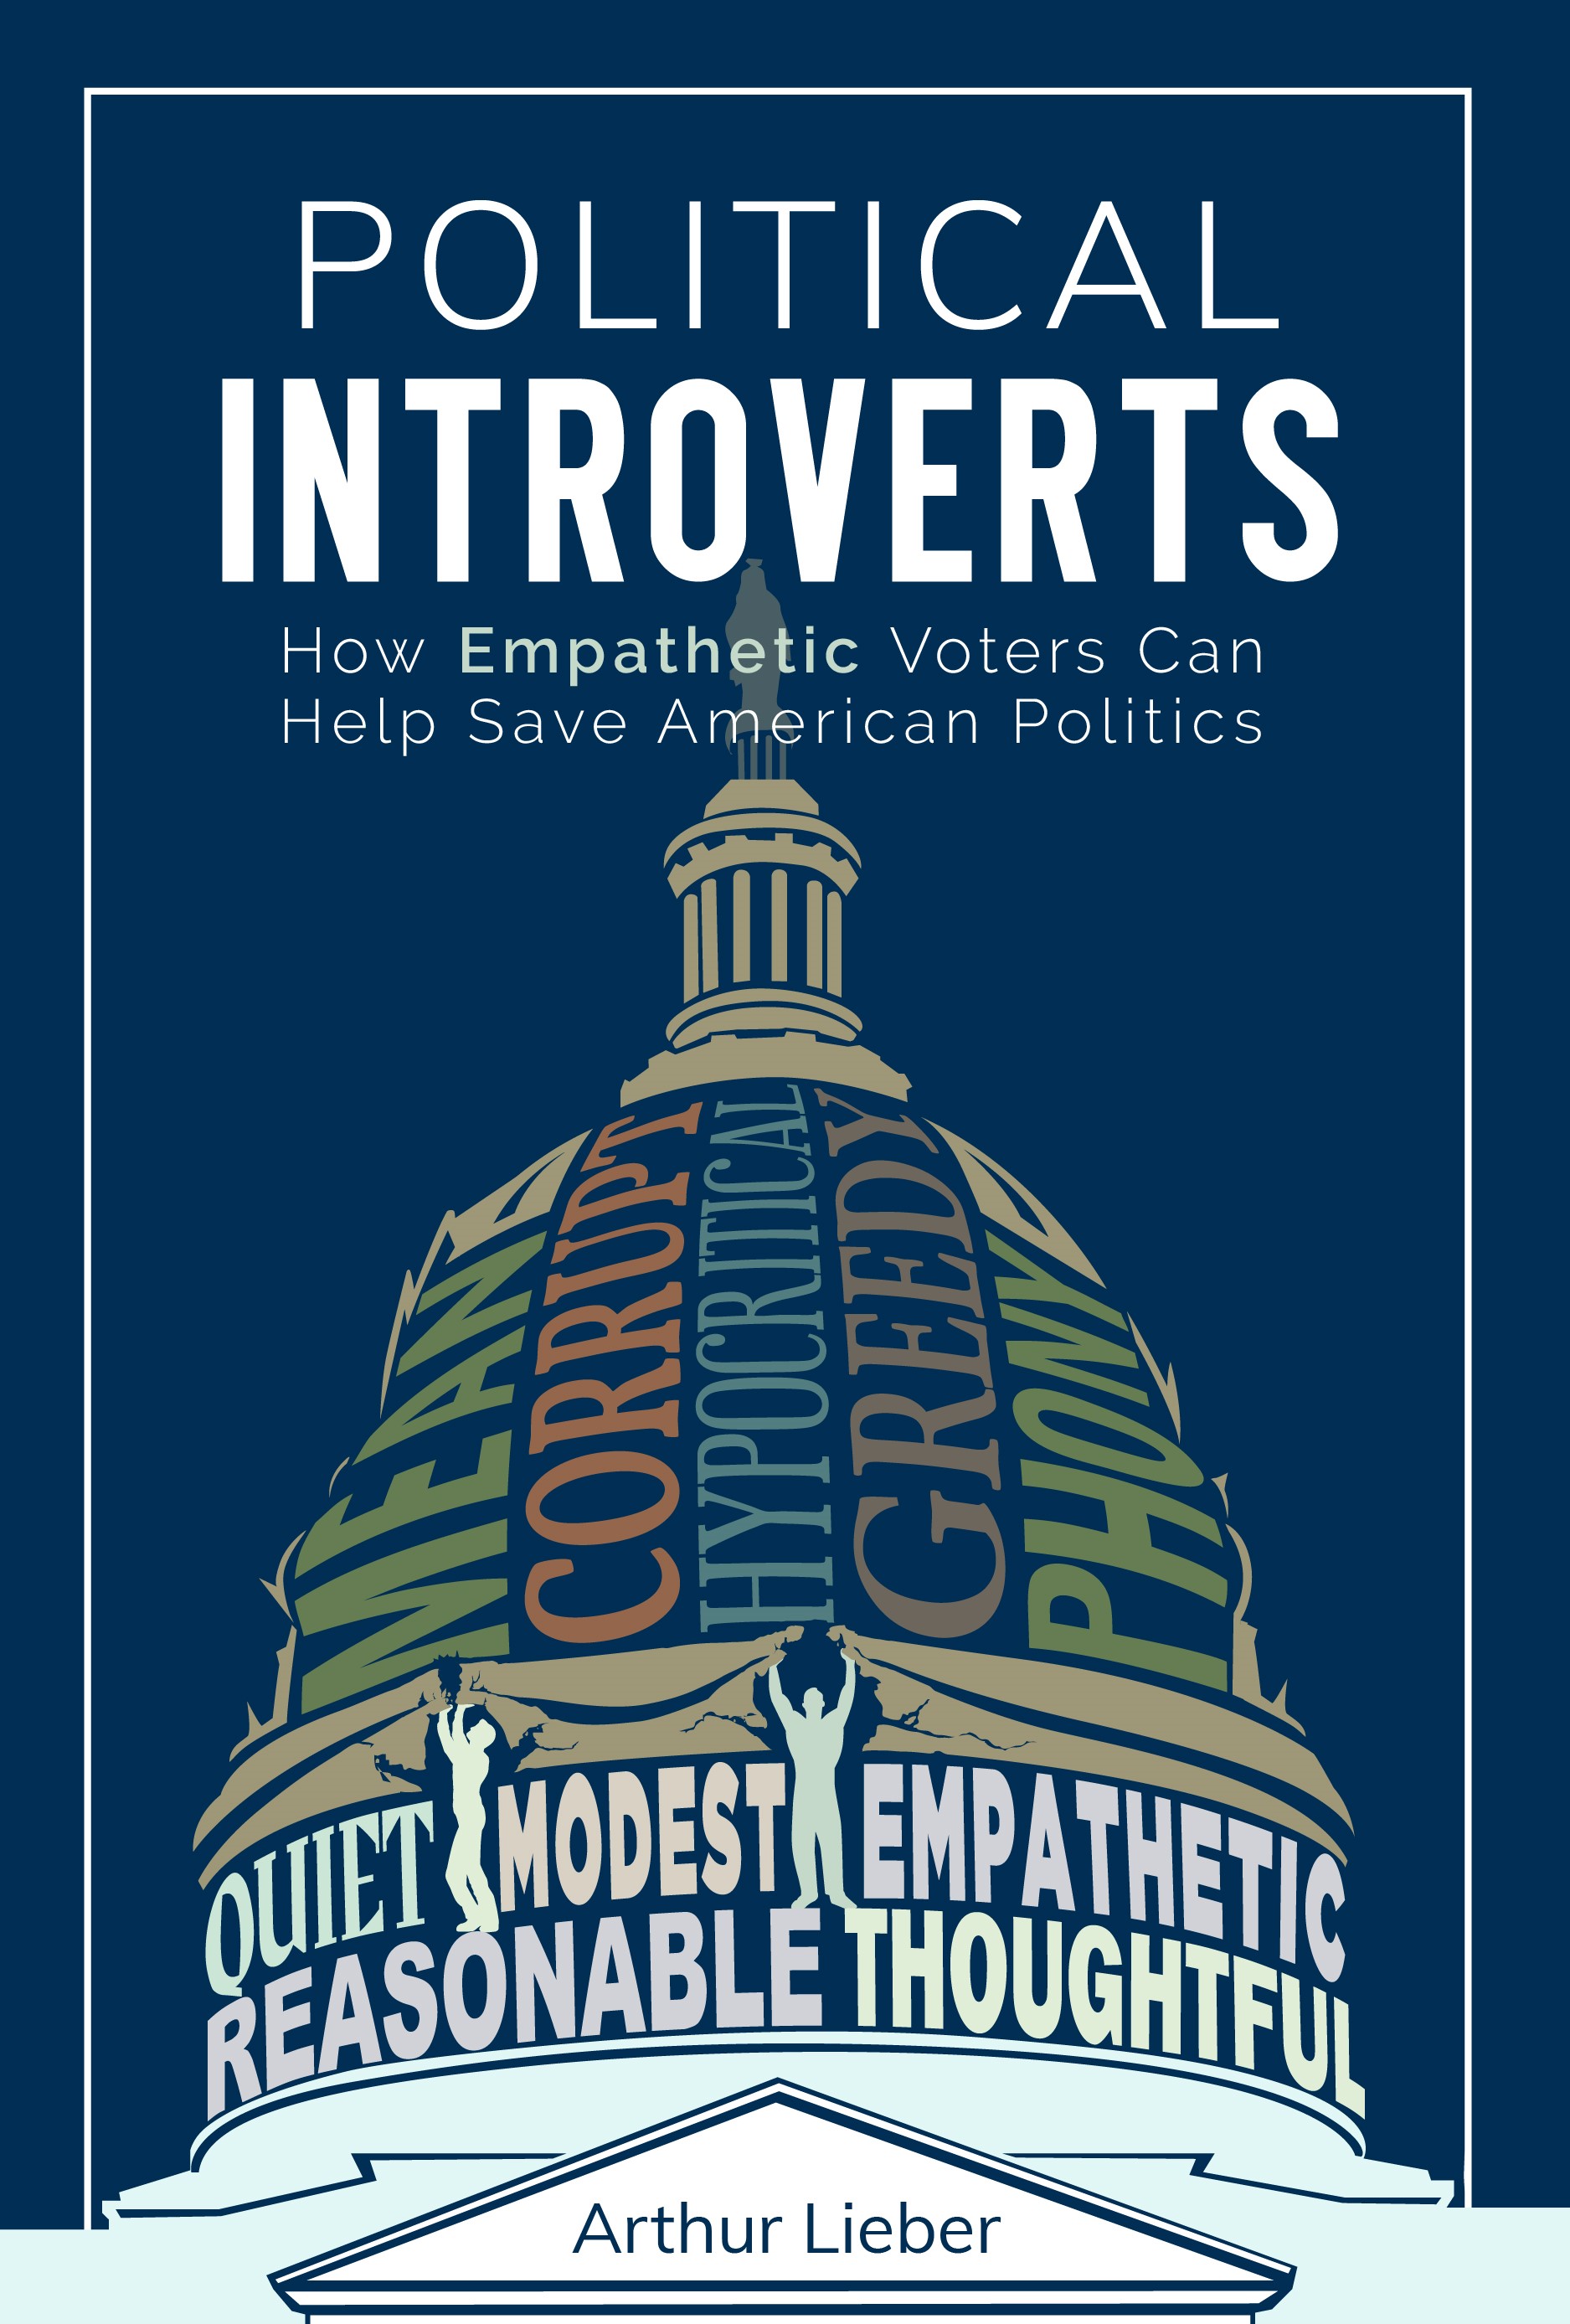 (c) Politicalintroverts.com